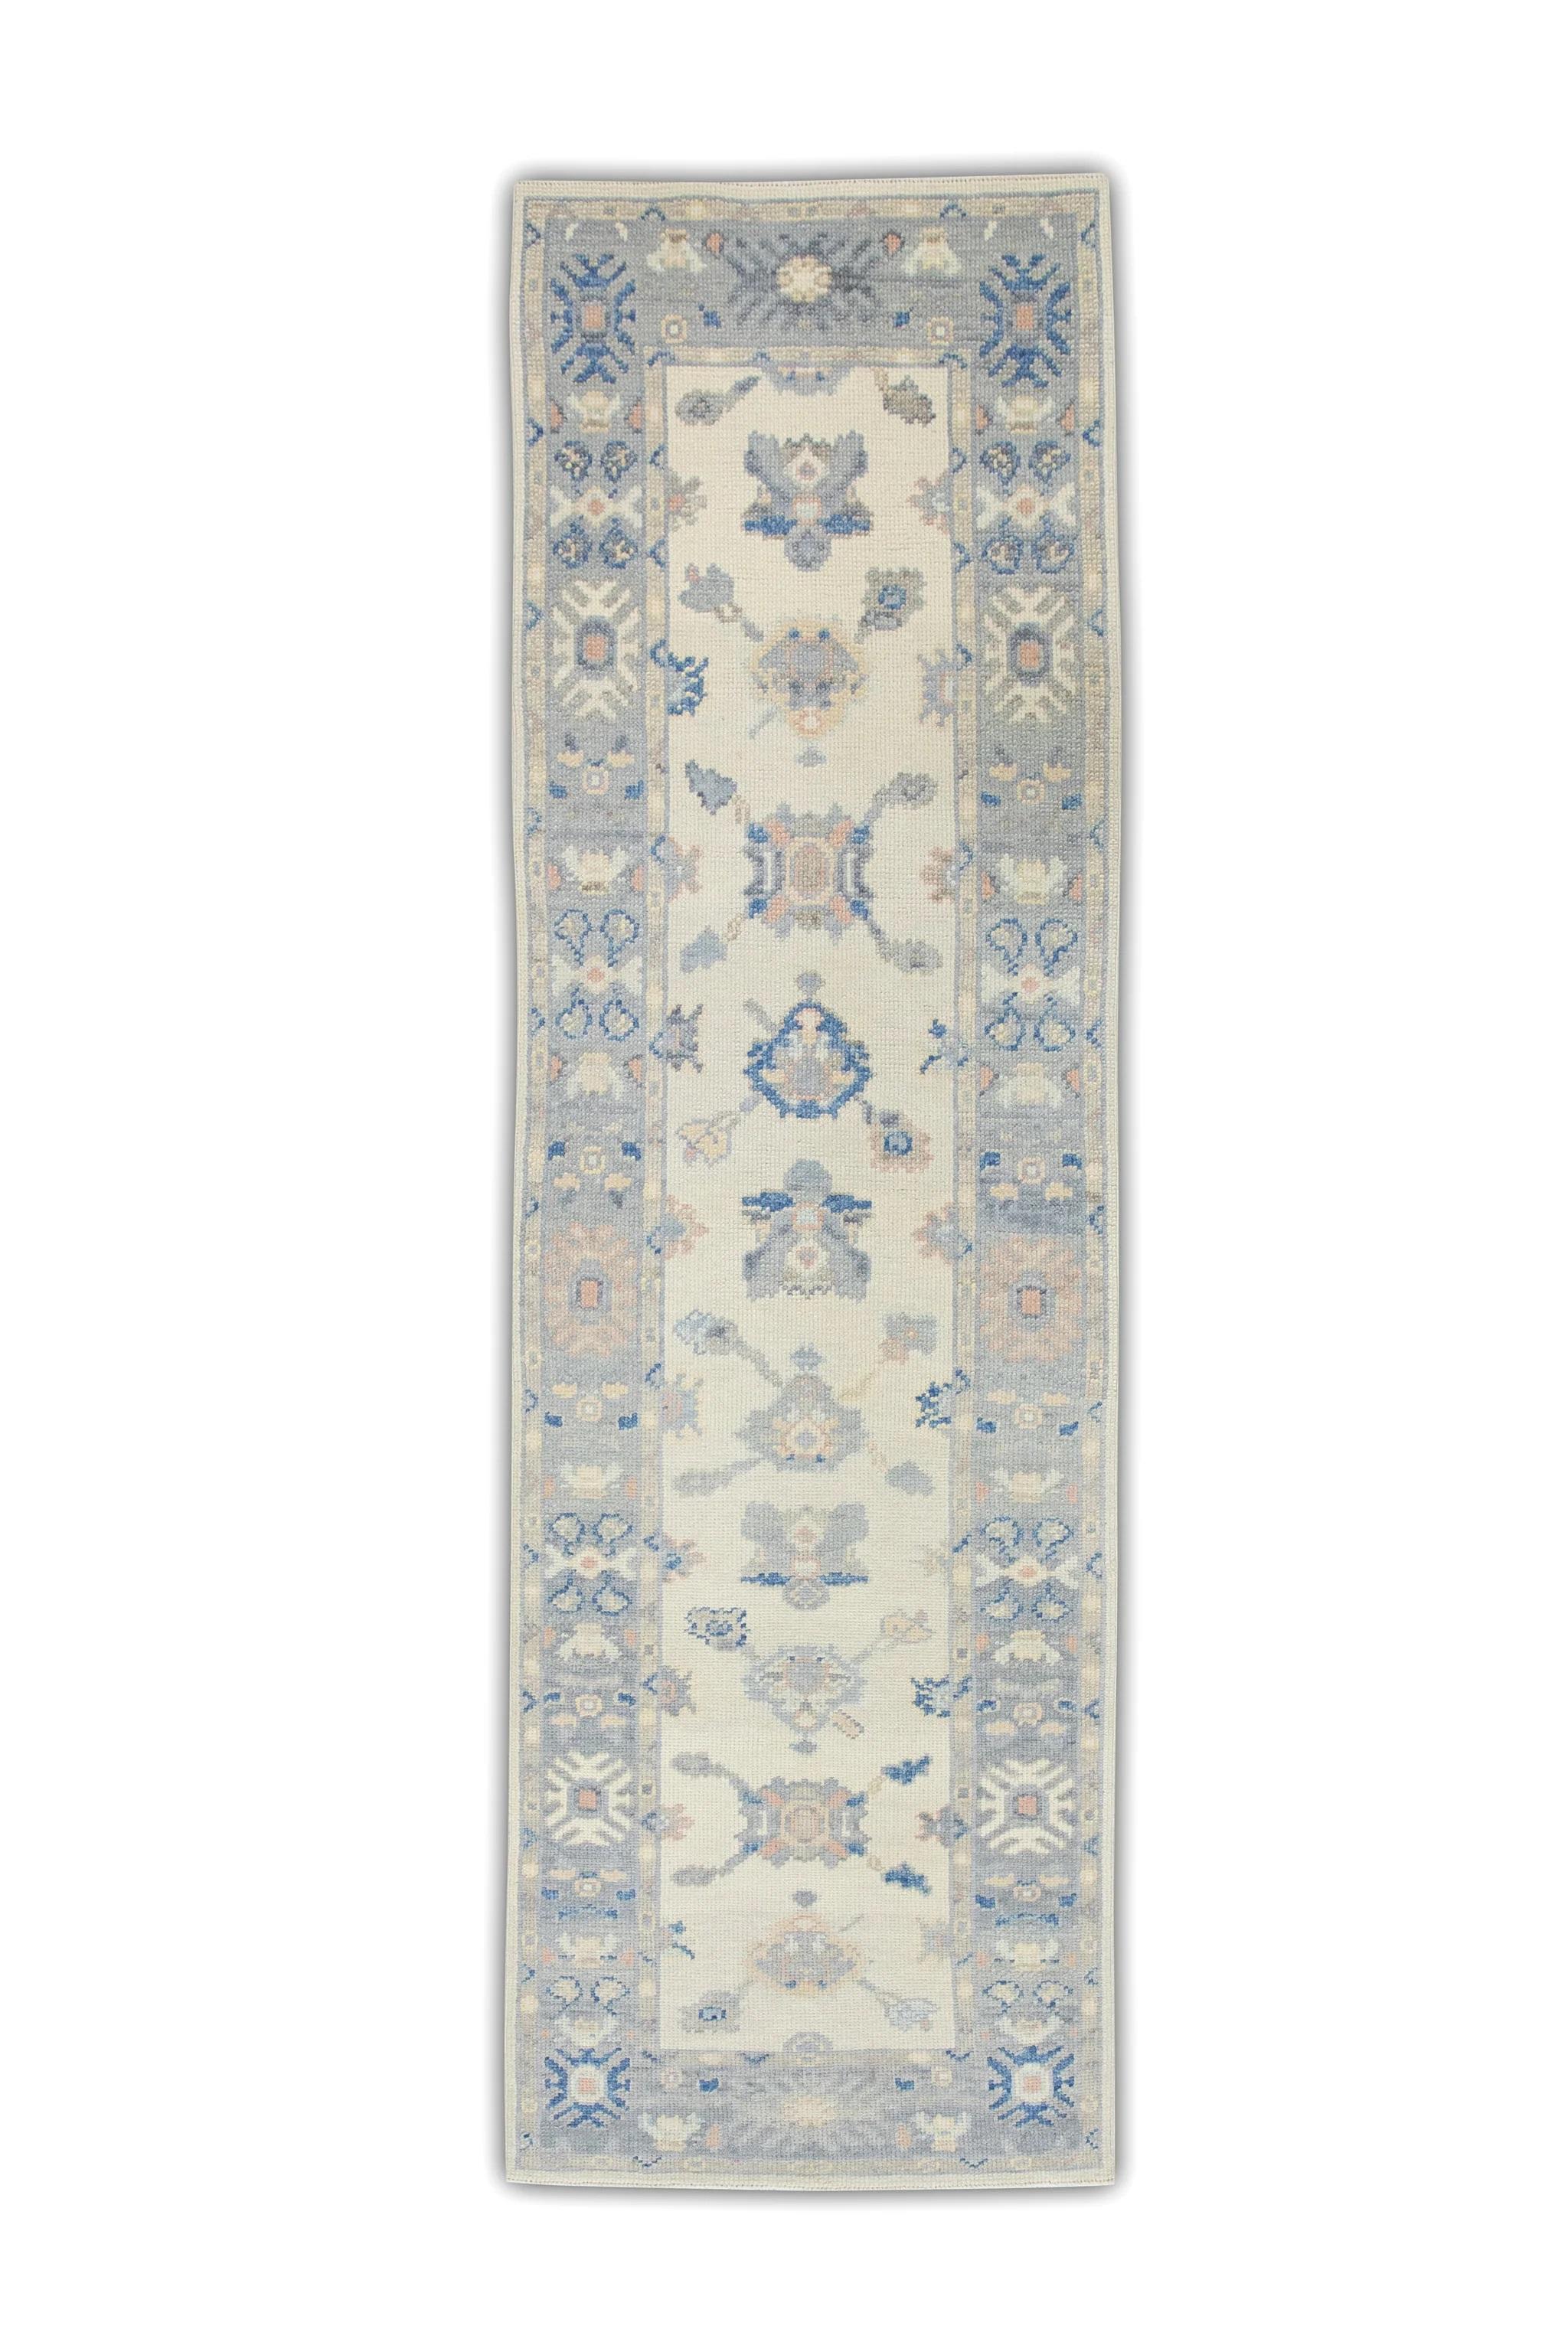 Cream Handwoven Wool Turkish Oushak Rug in Blue Floral Pattern 2'6